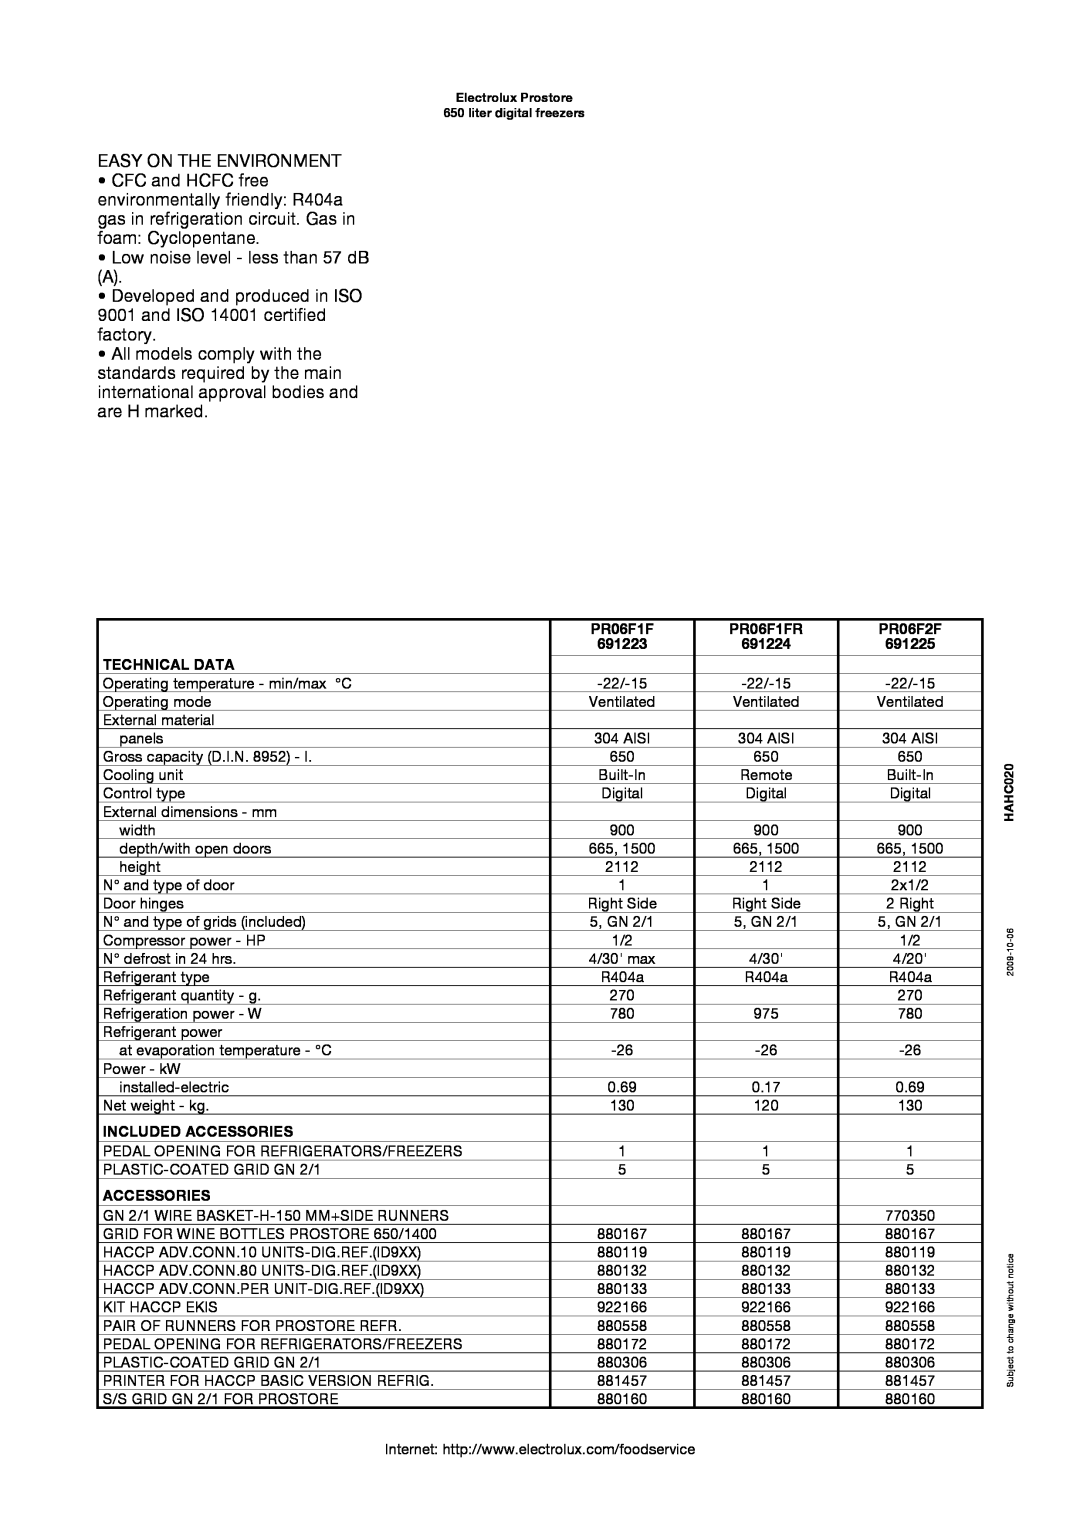 Electrolux manual PR06F1FR, PR06F2F, 691223, 691224, 691225, Technical Data, Included Accessories 